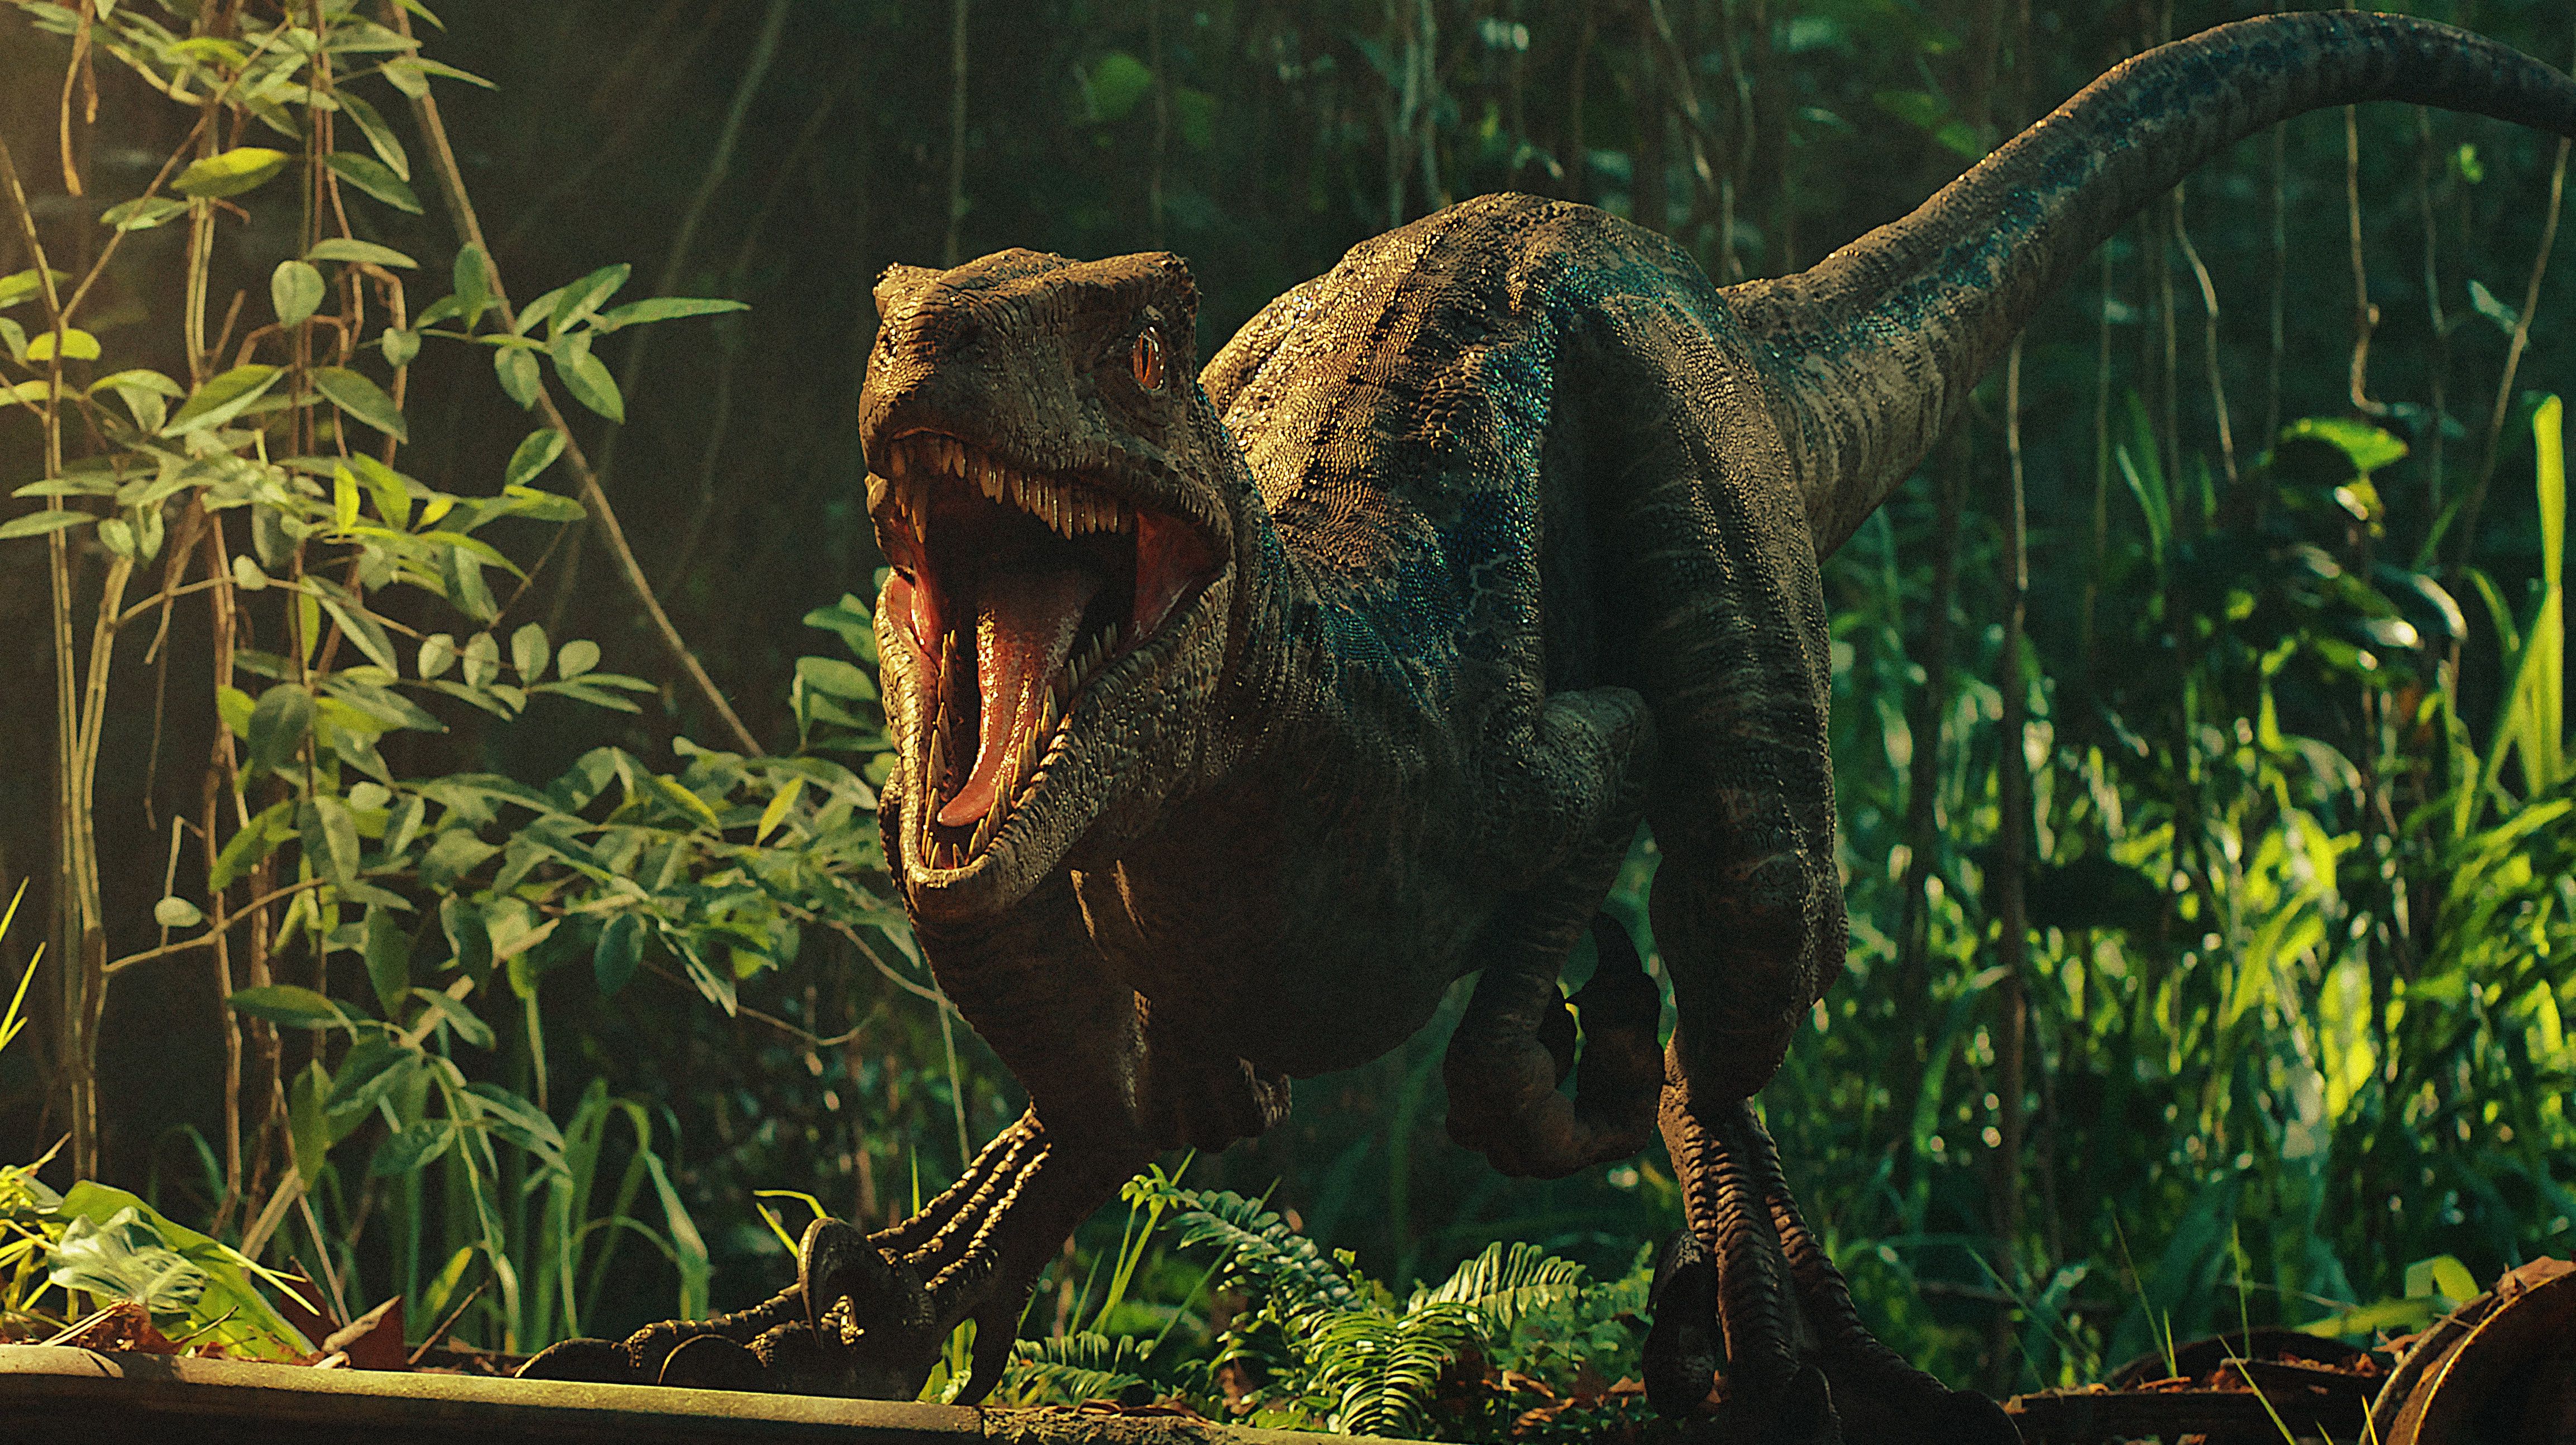 Jurassic World Fallen Kingdom Dinosaurs 4K Wallpaper, HD Movies 4K Wallpaper, Image, Photo and Background